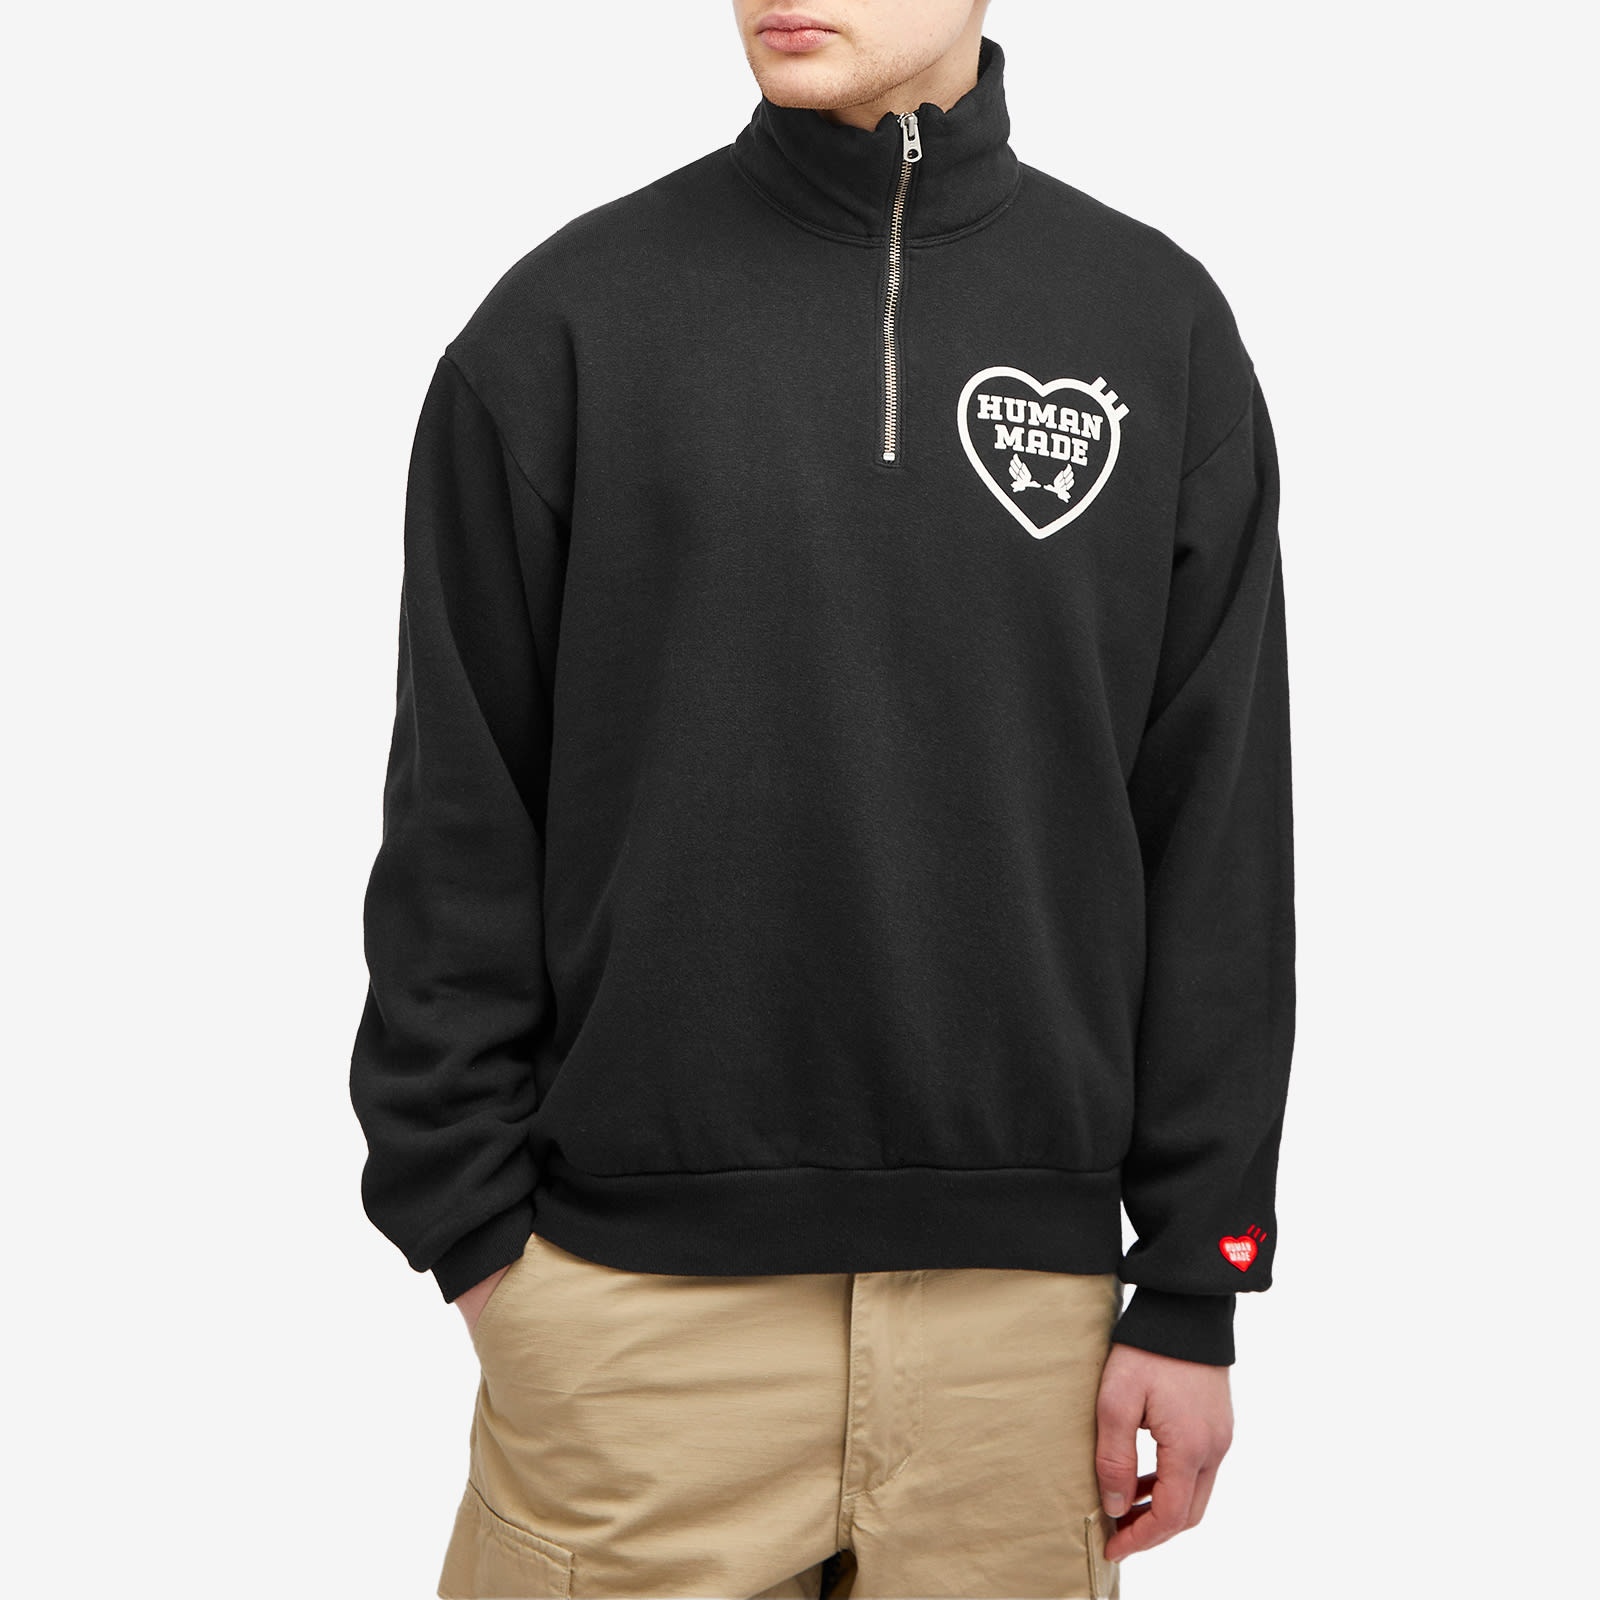 Human Made Military Half-Zip Sweatshirt - 2